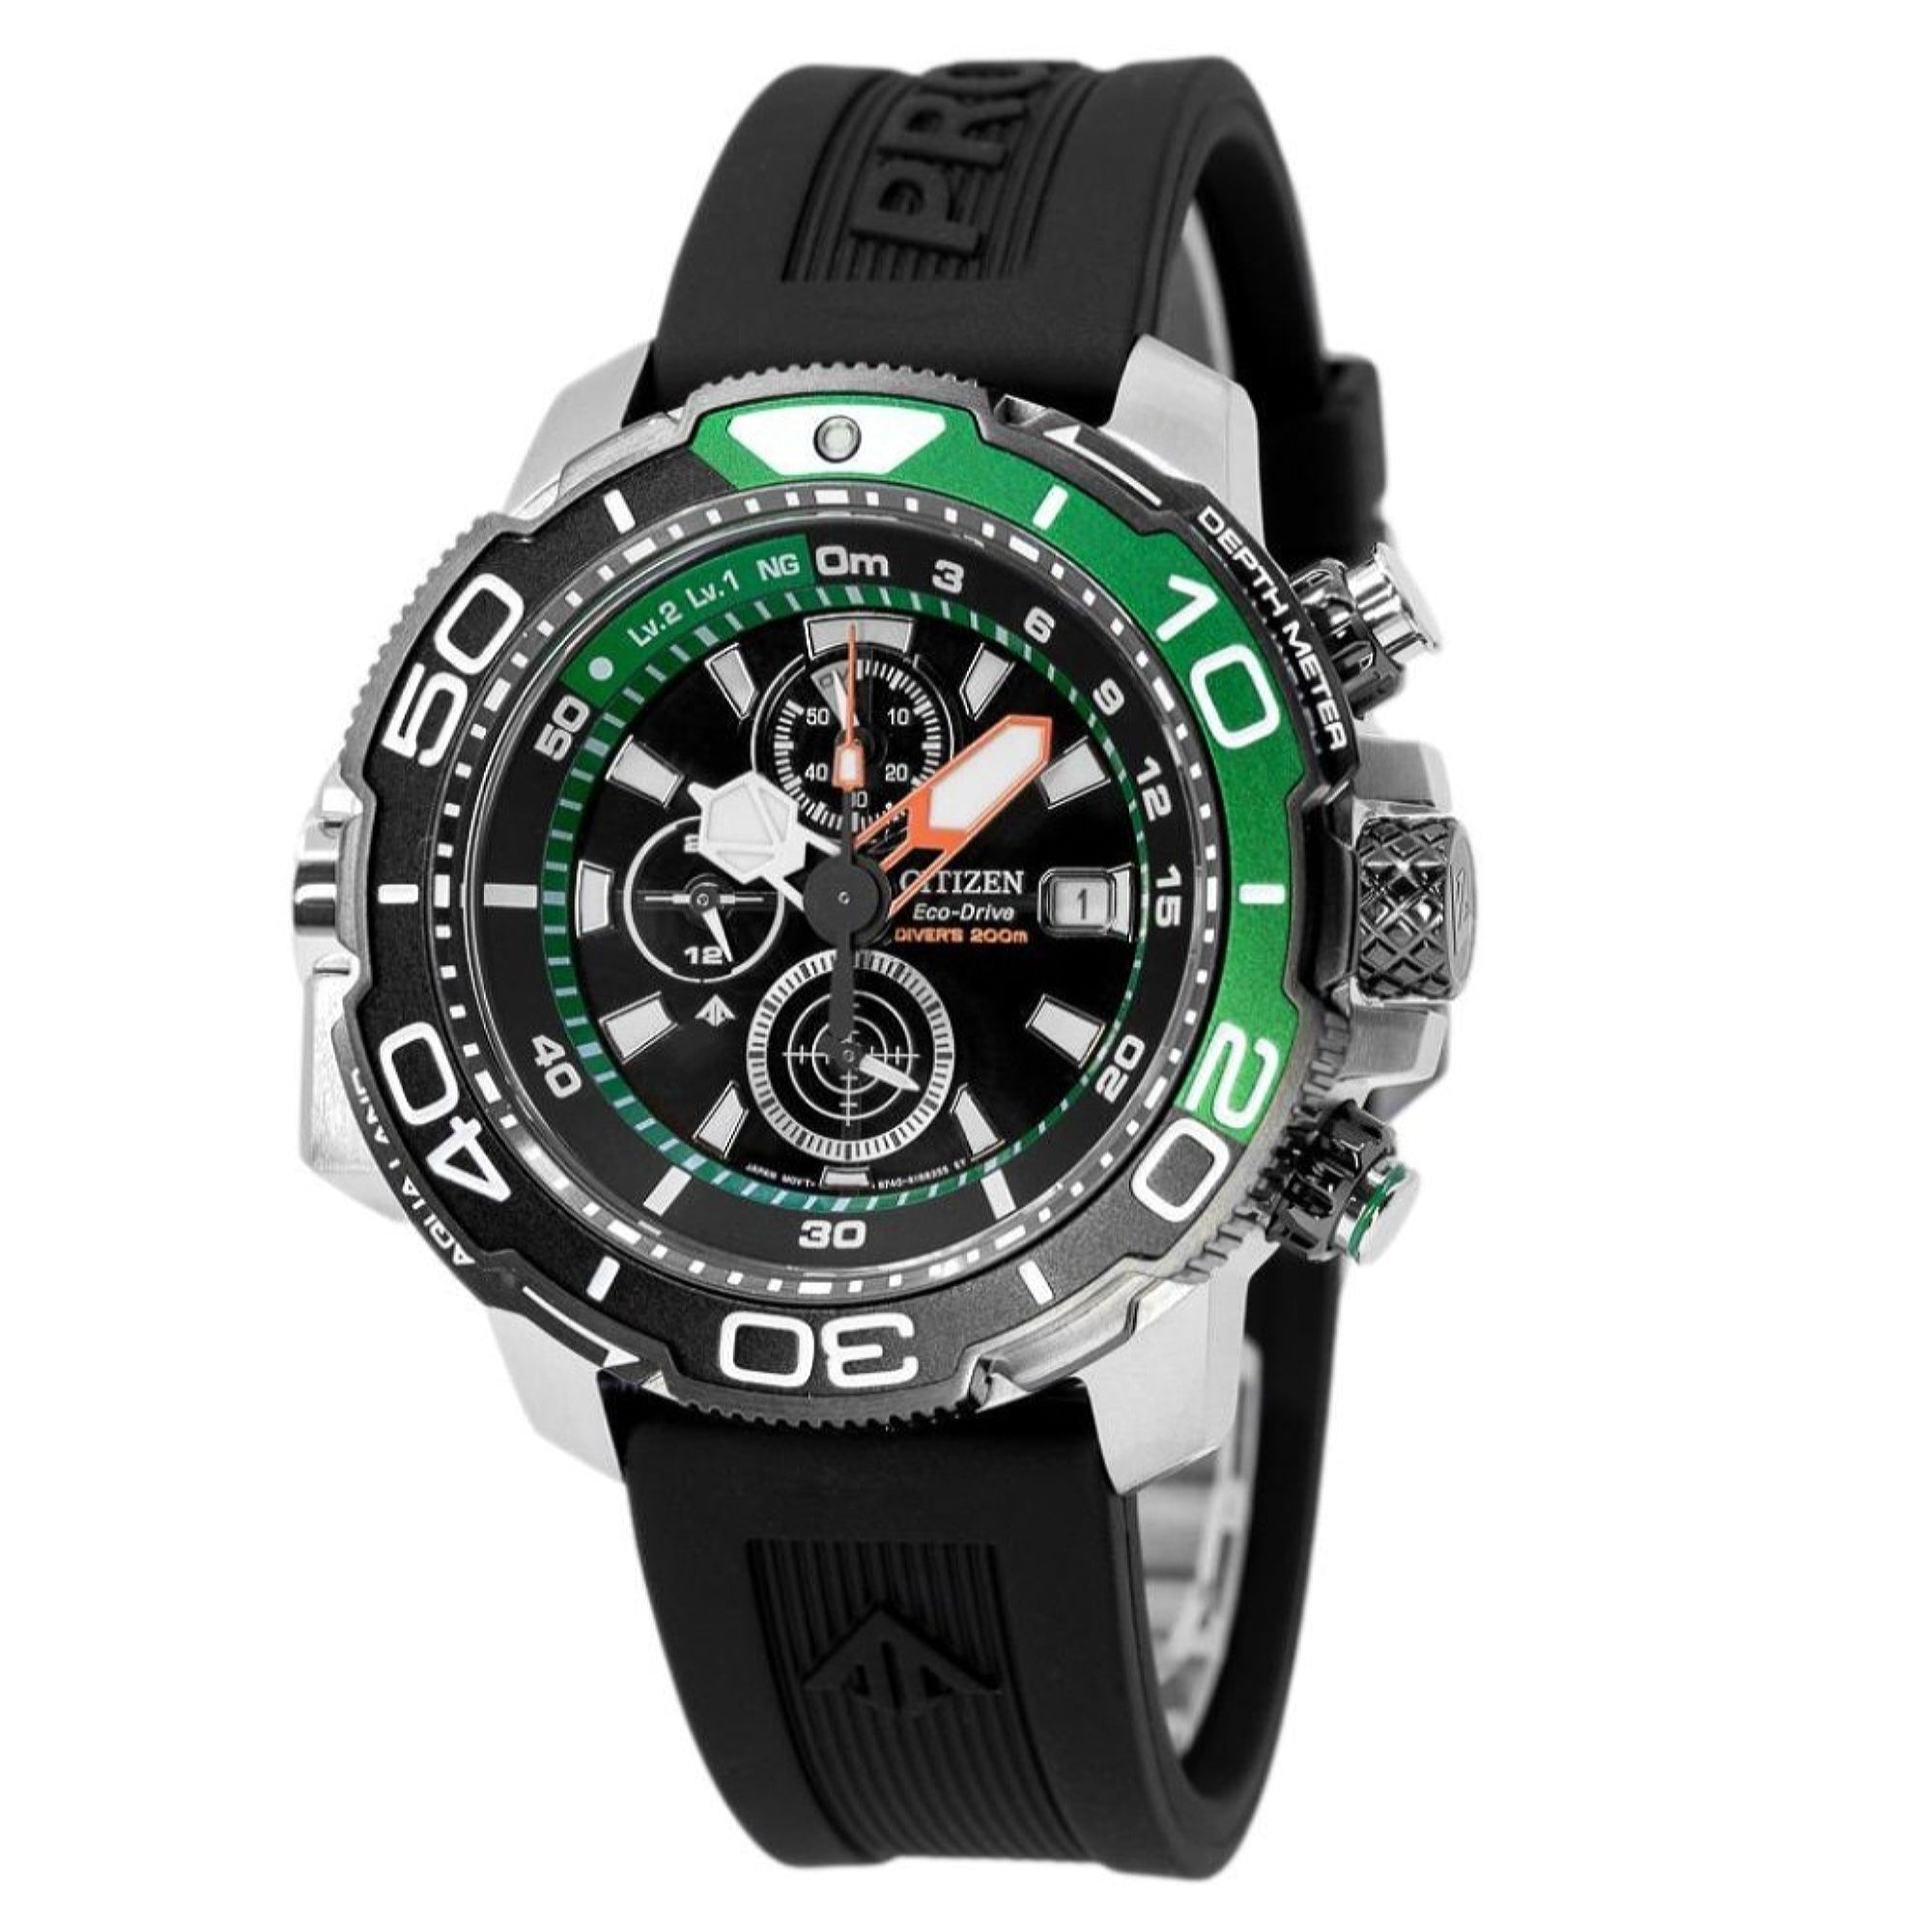 Citizen Men's BJ2168-01E Eco-drive Chronograph Black Rubber Watch